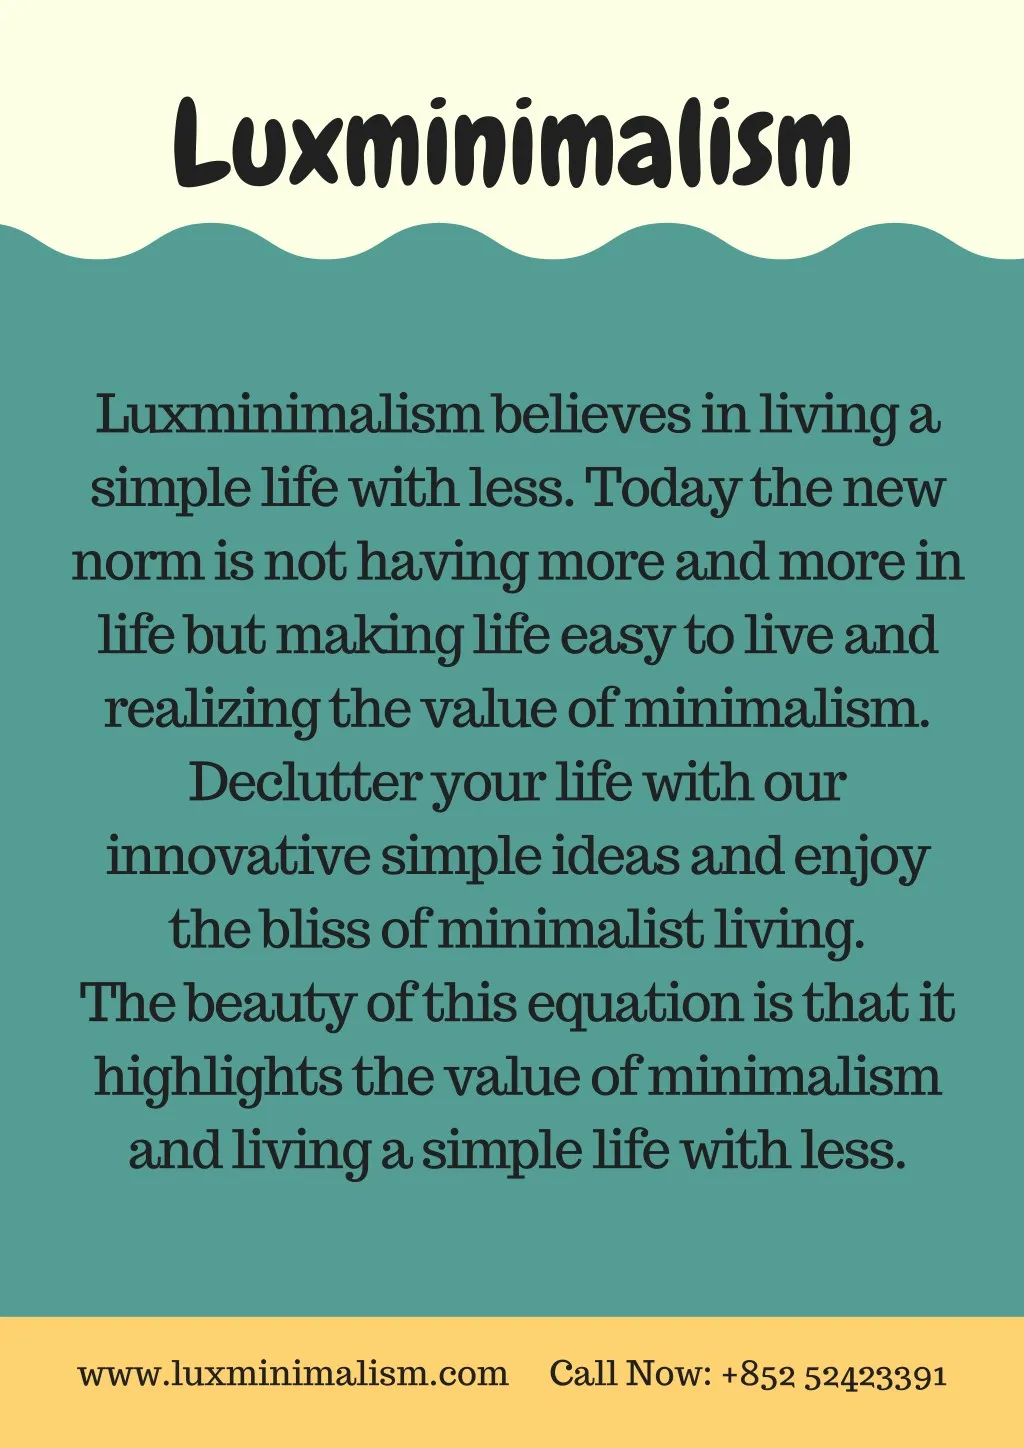 luxminimalism